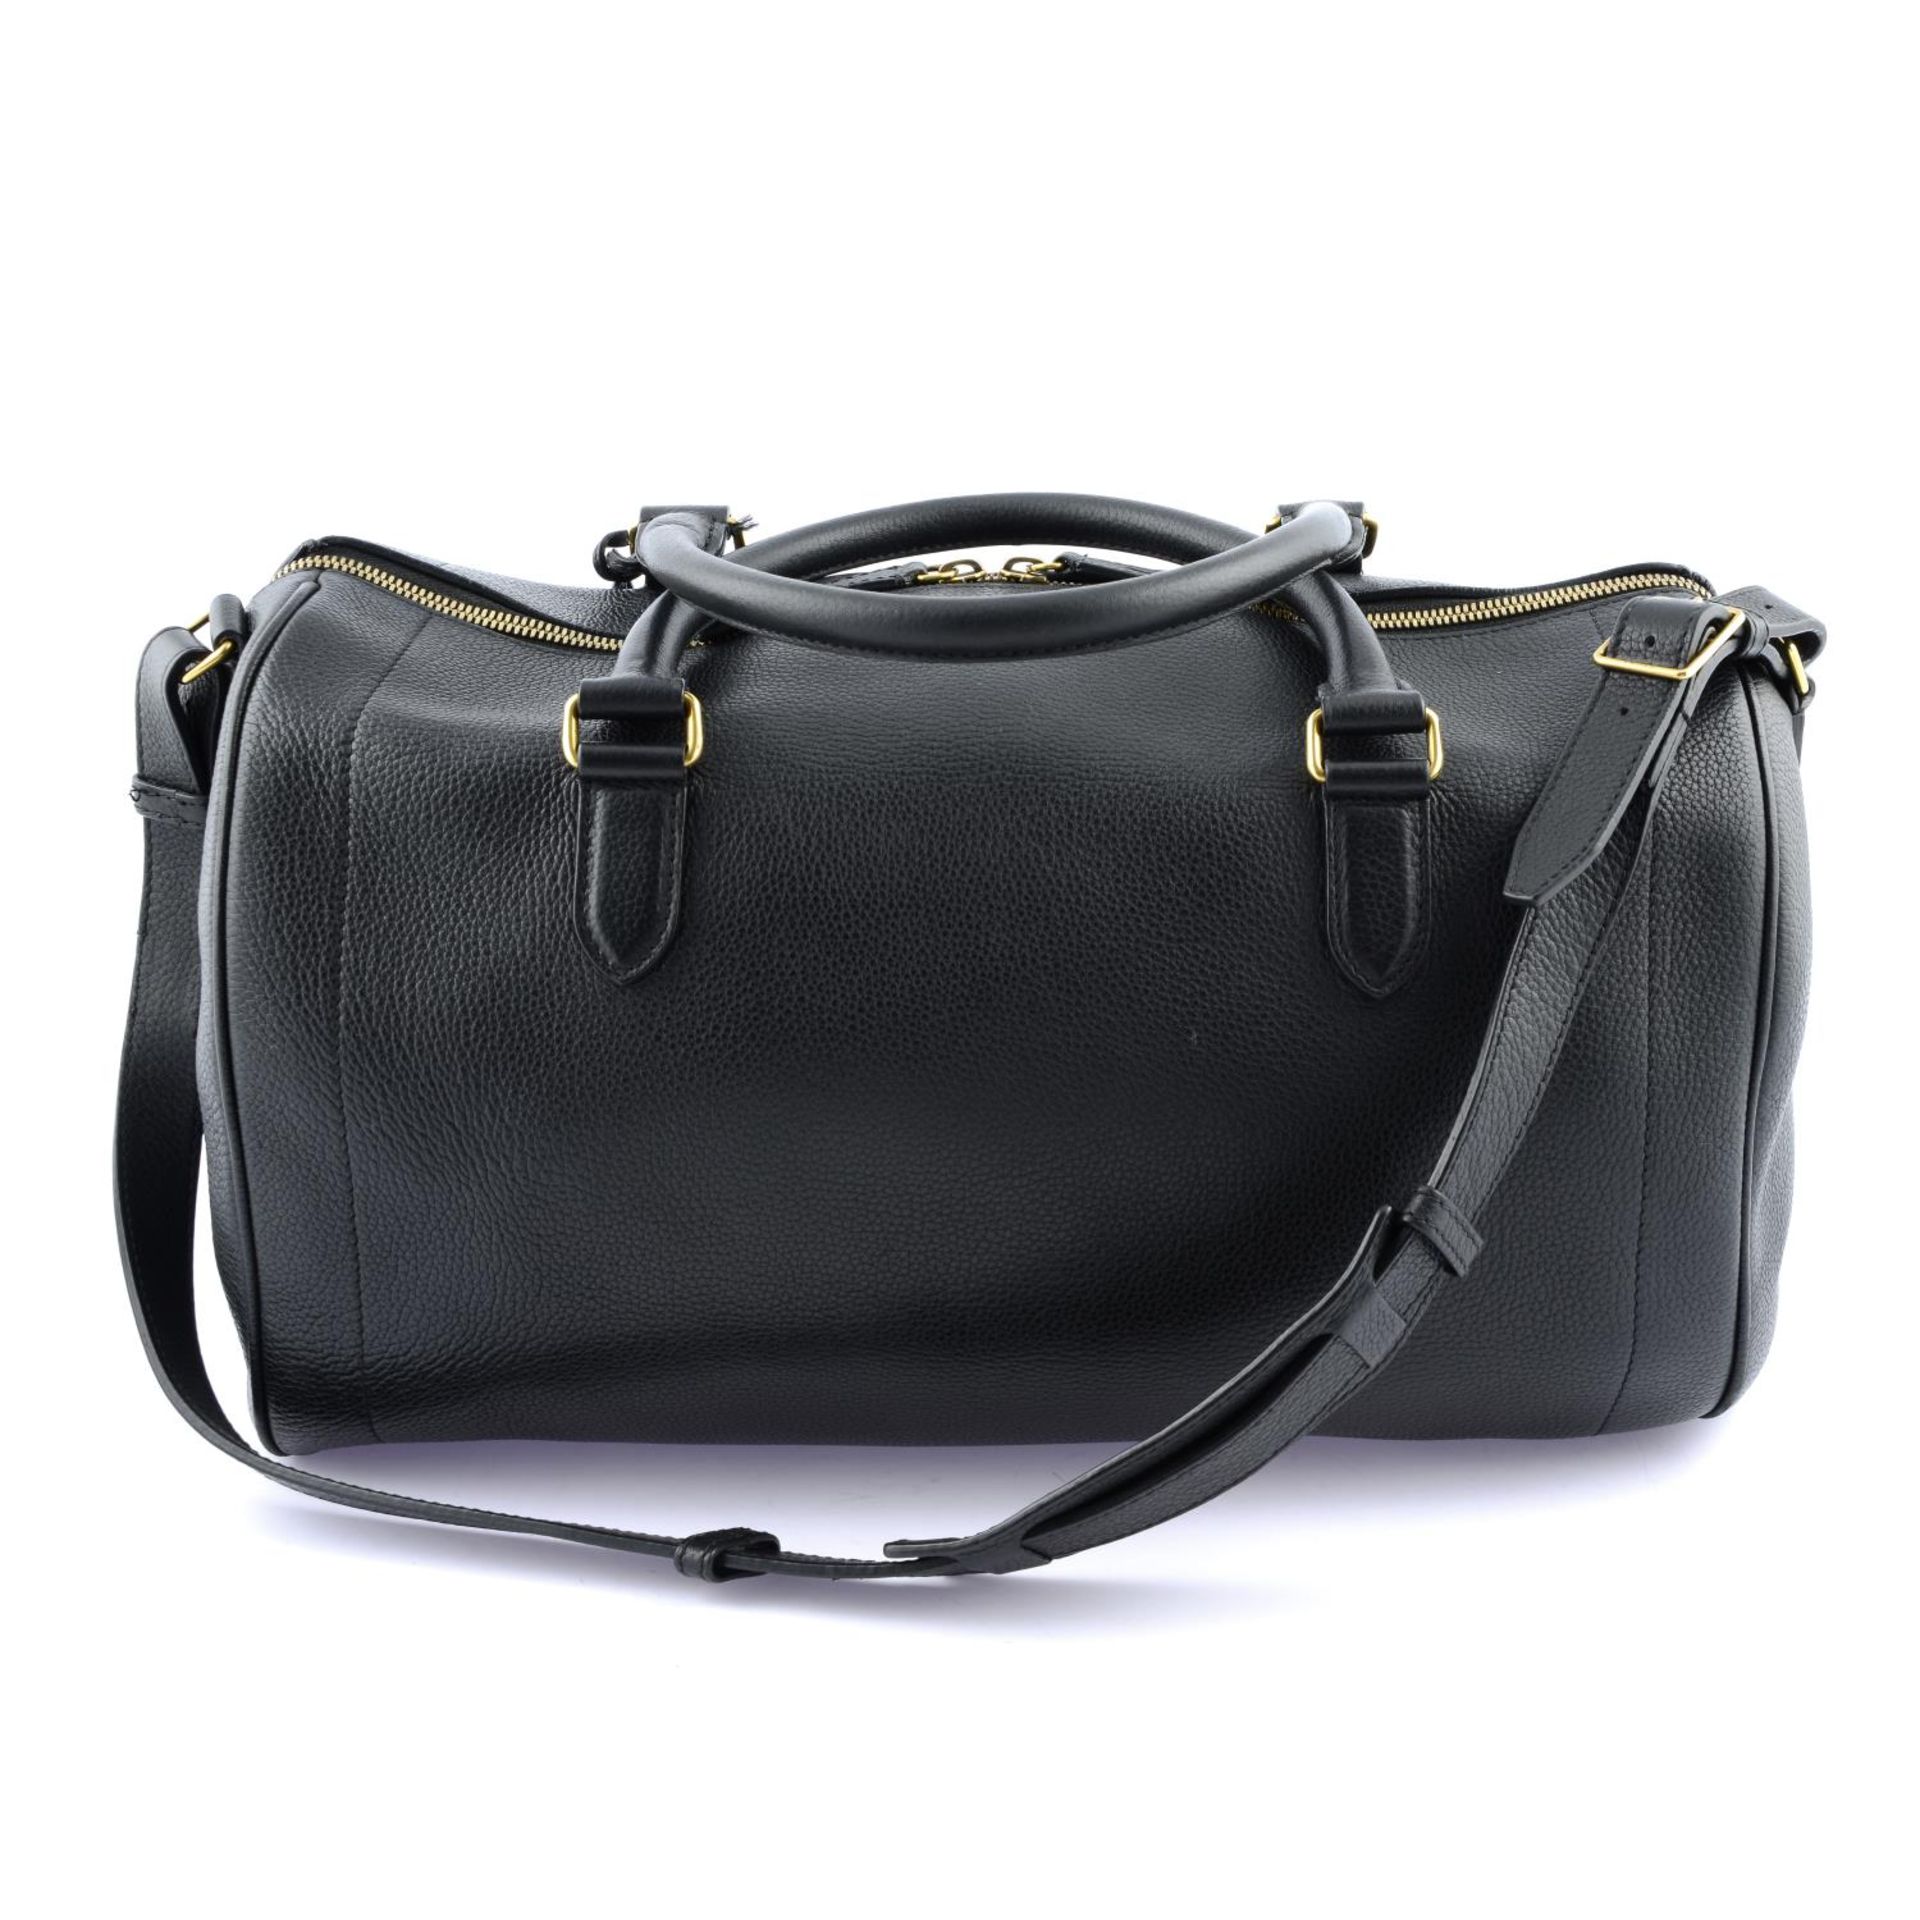 CÉLINE - a leather Boston handbag. - Image 2 of 4